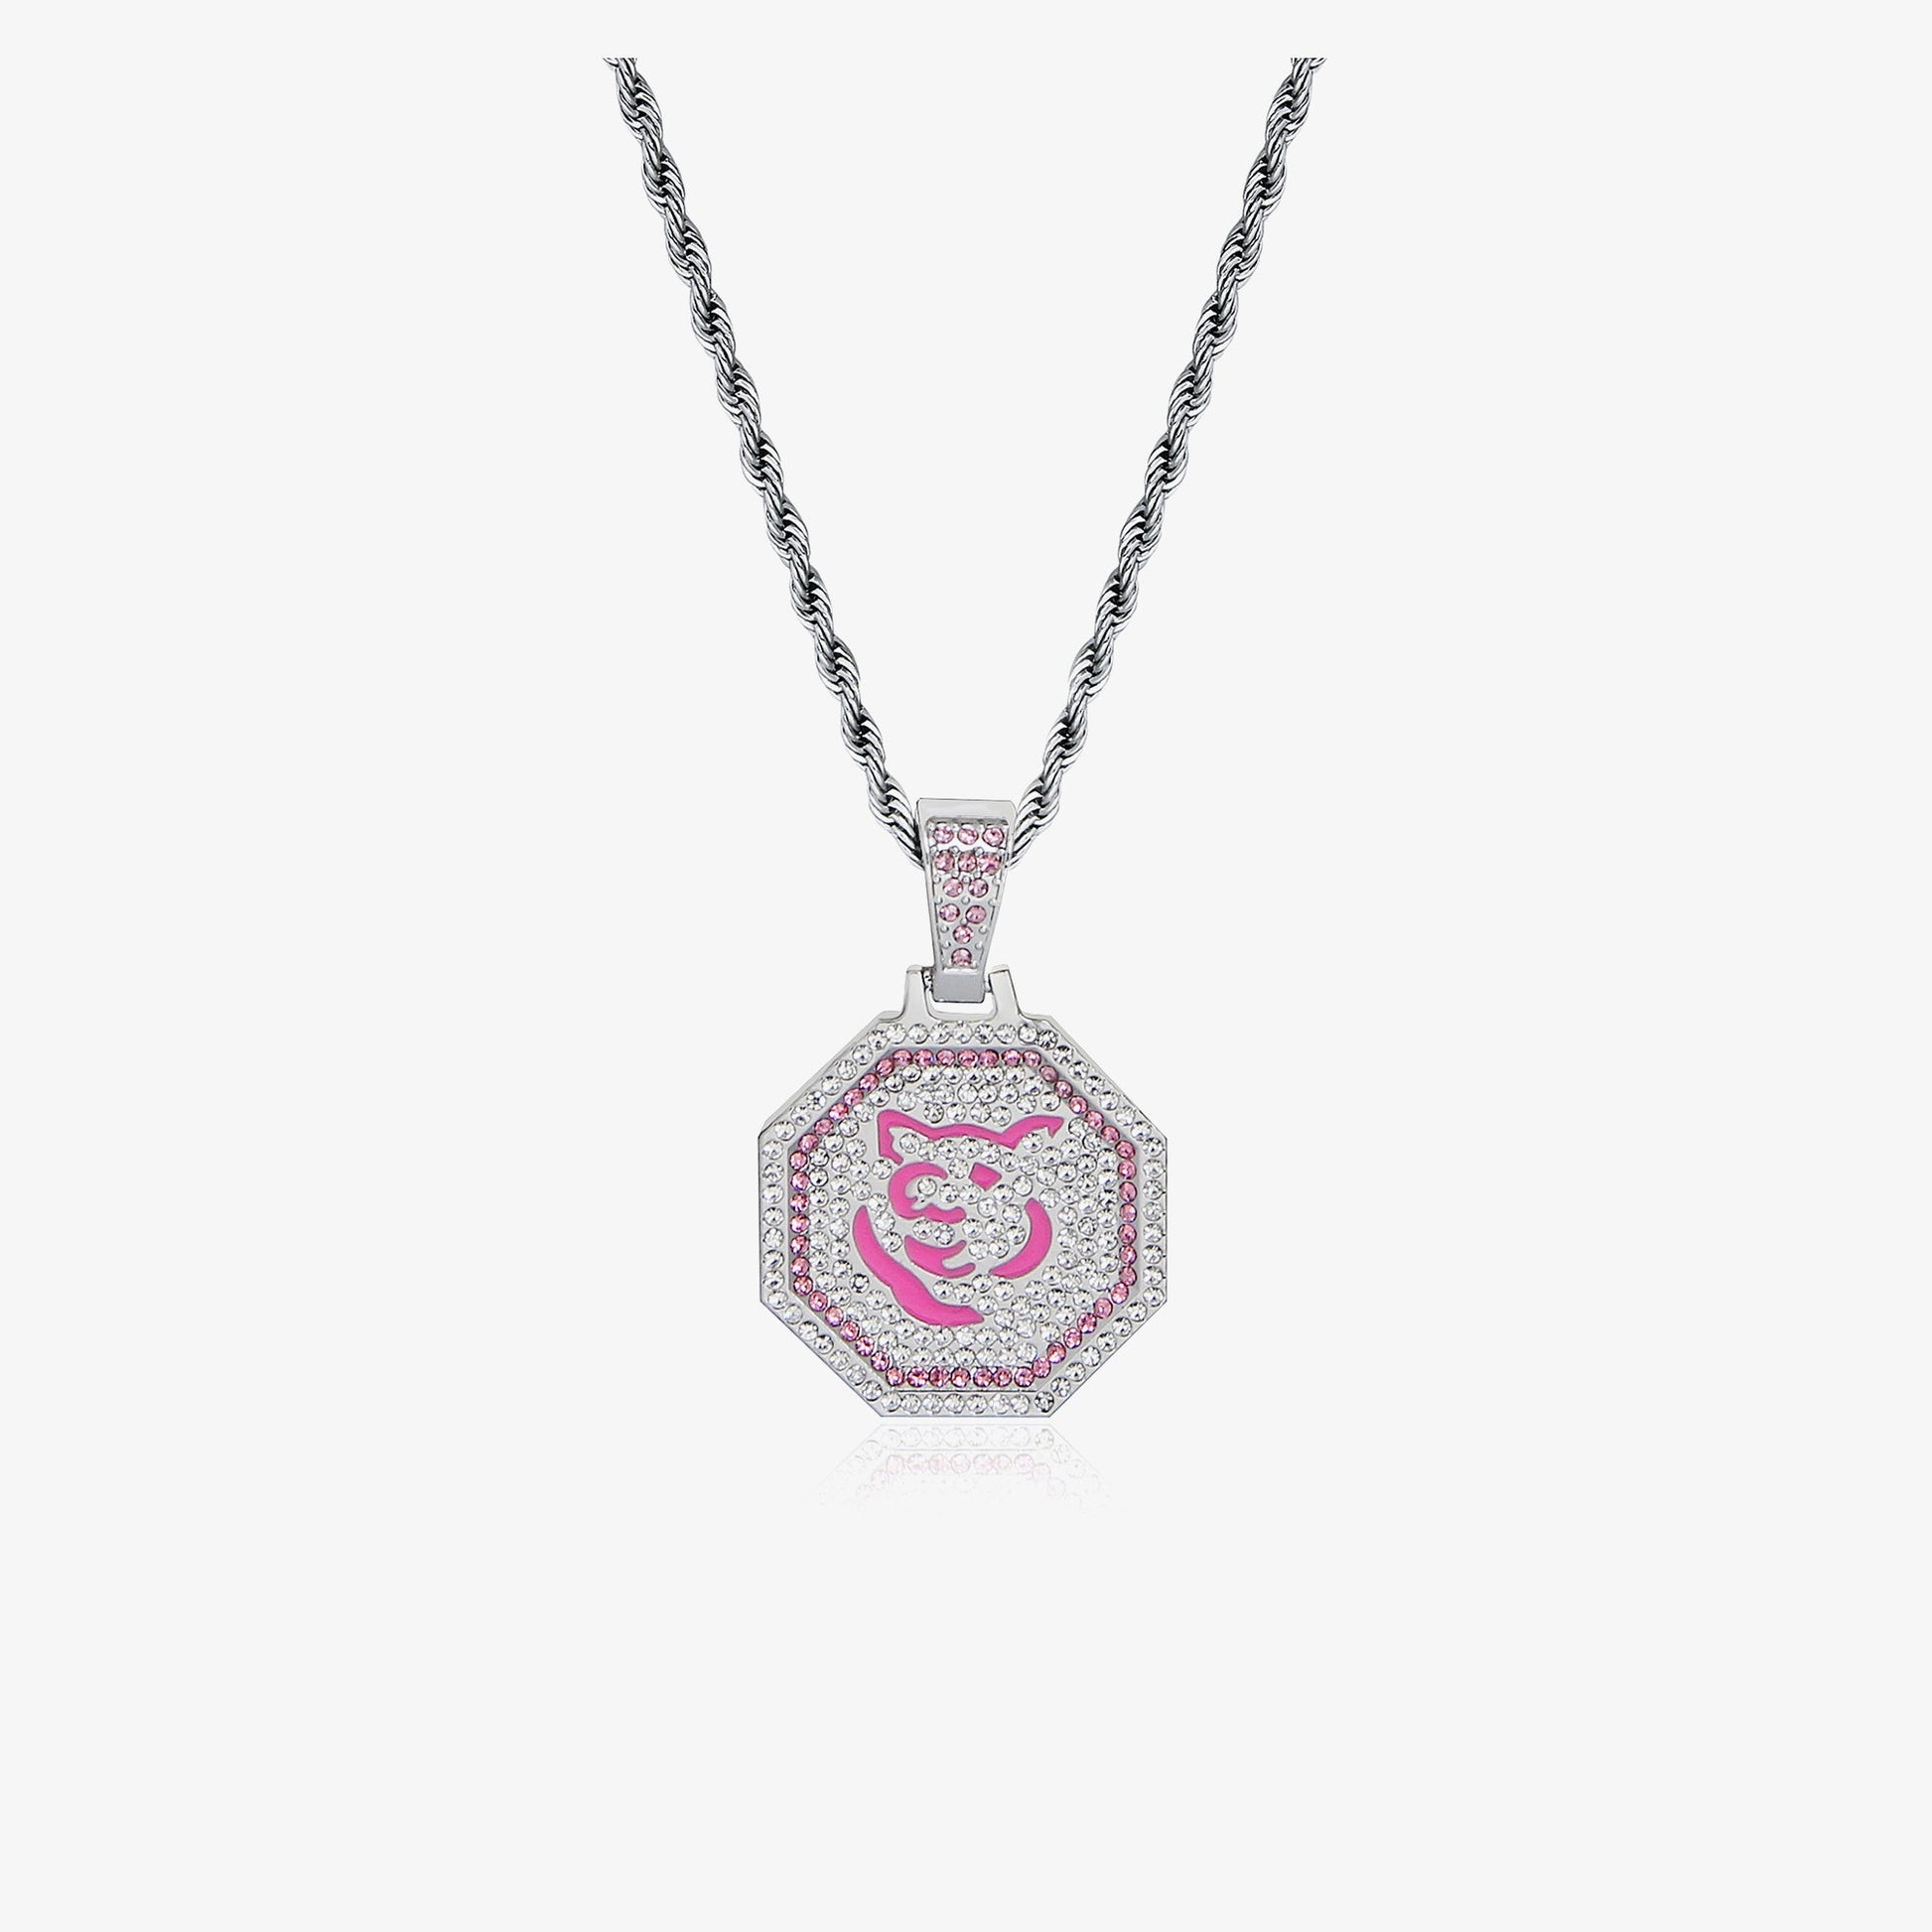 Twelve Zodiac Zodiac Men Fashionable Necklaces - NextthinkShop0CJLX174931107GT0